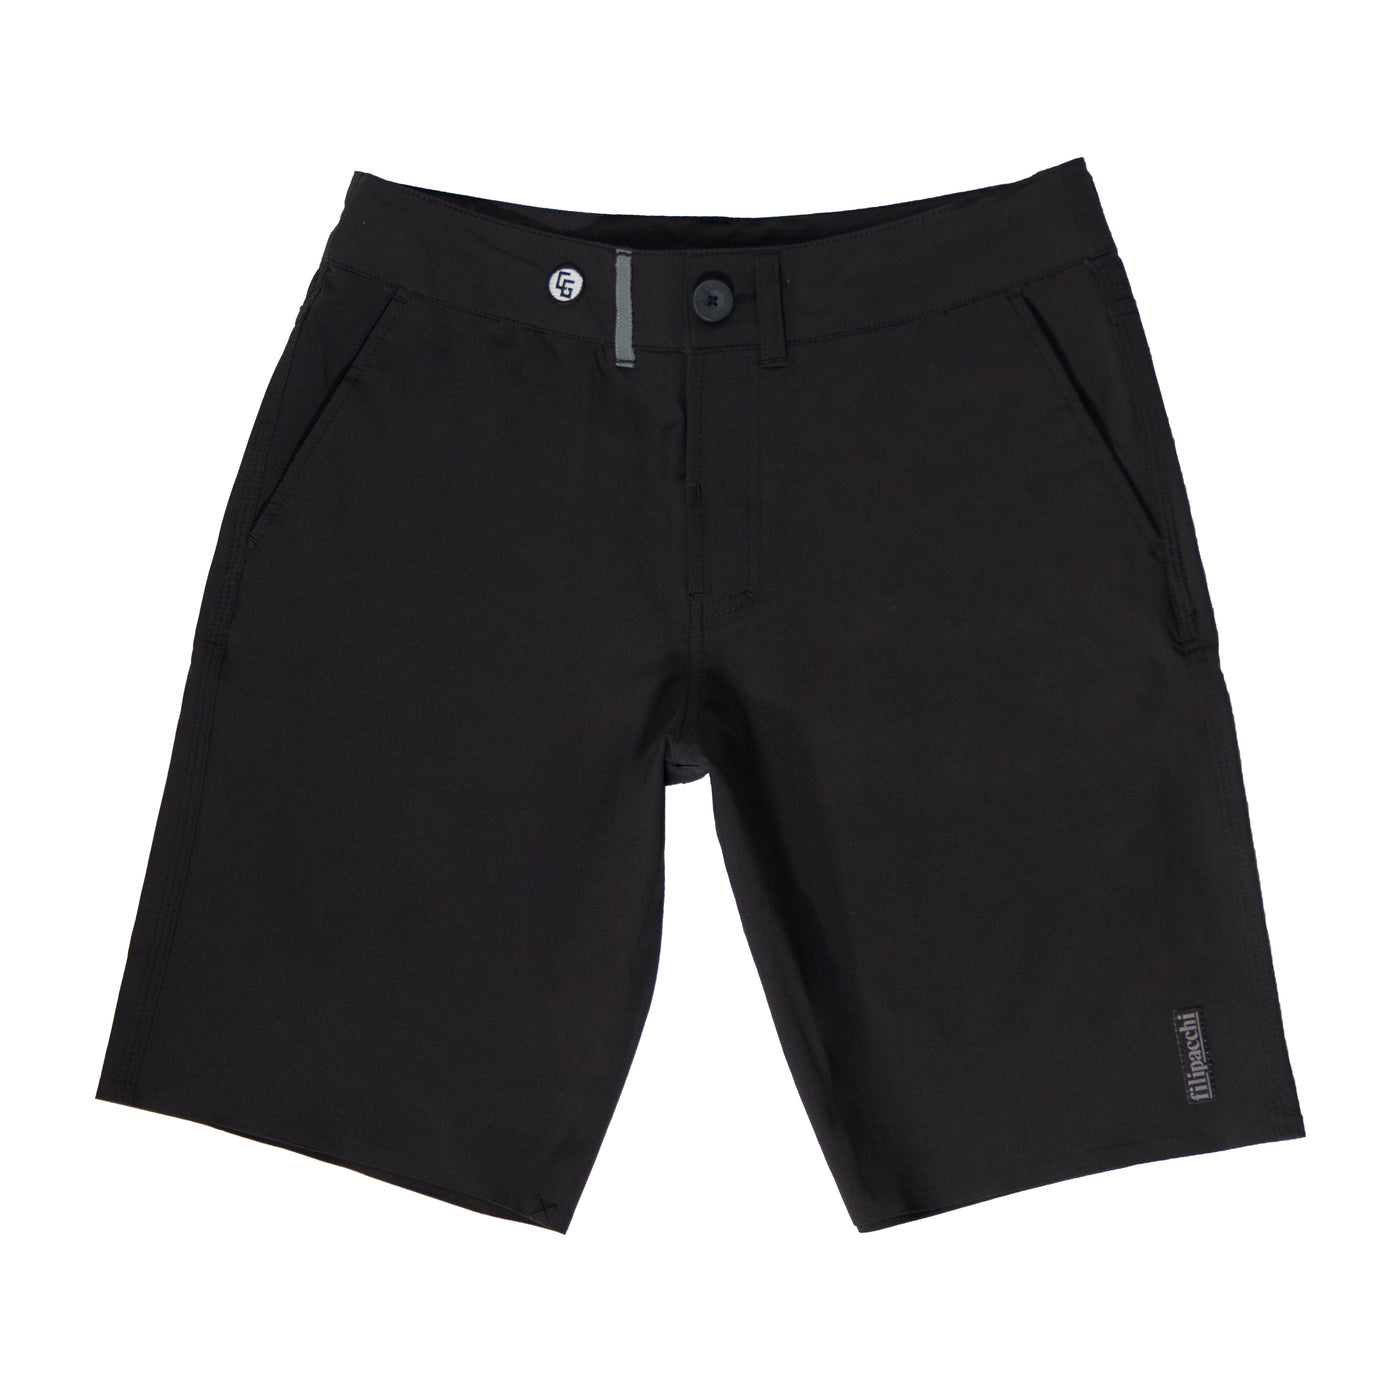 CG Habitats - Filipacchi - 314 Walker fit Board Shorts - Black